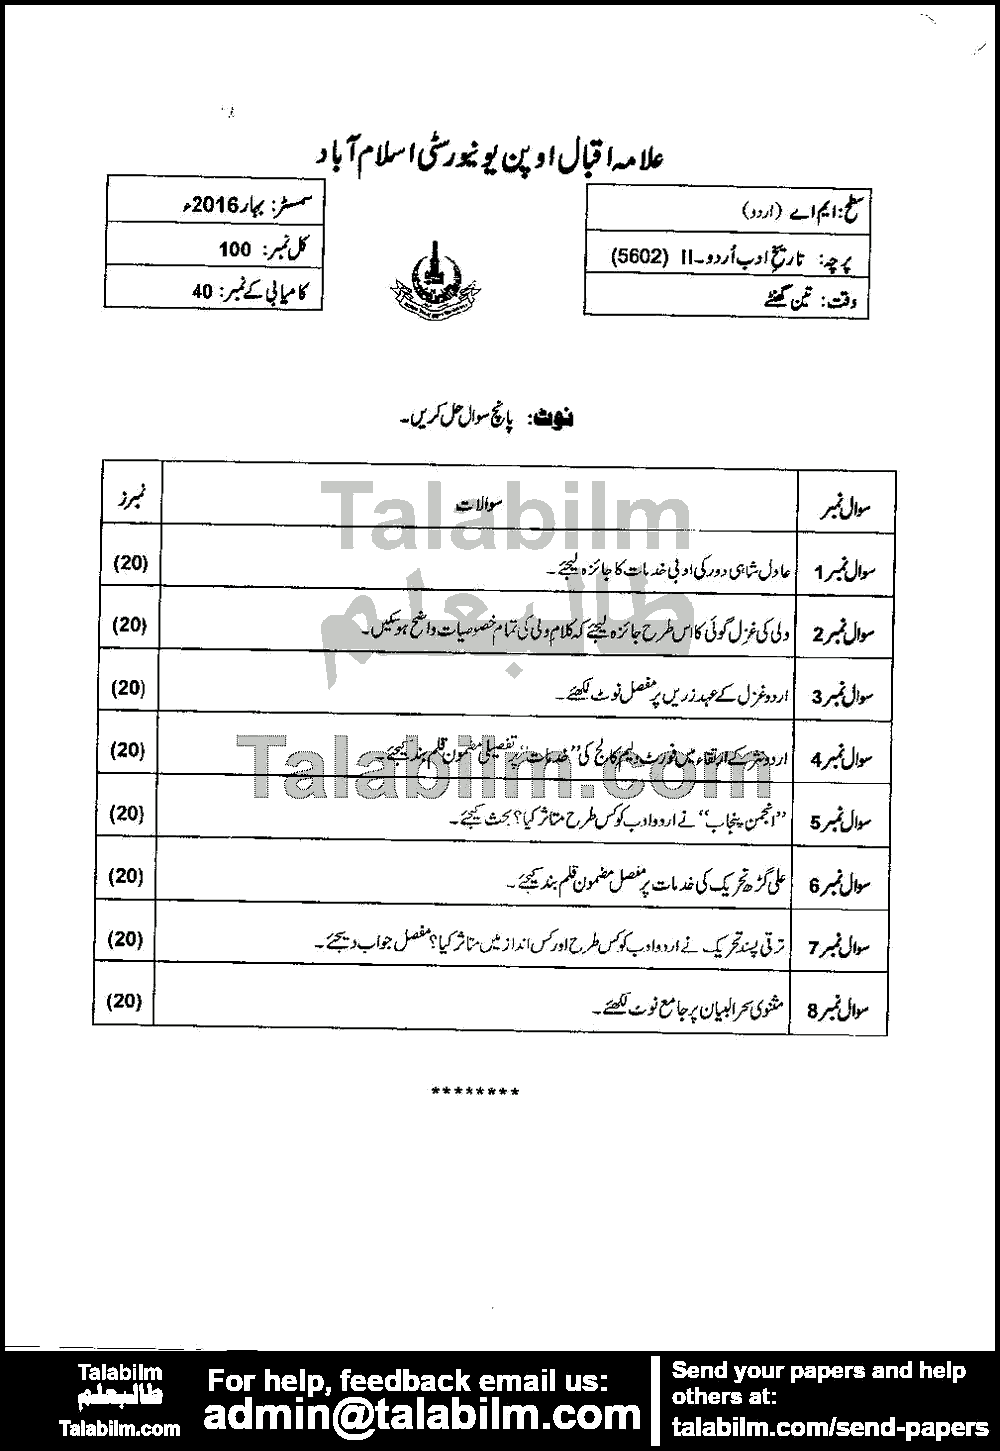 History of Urdu Adab-II 5602 past paper for Spring 2016